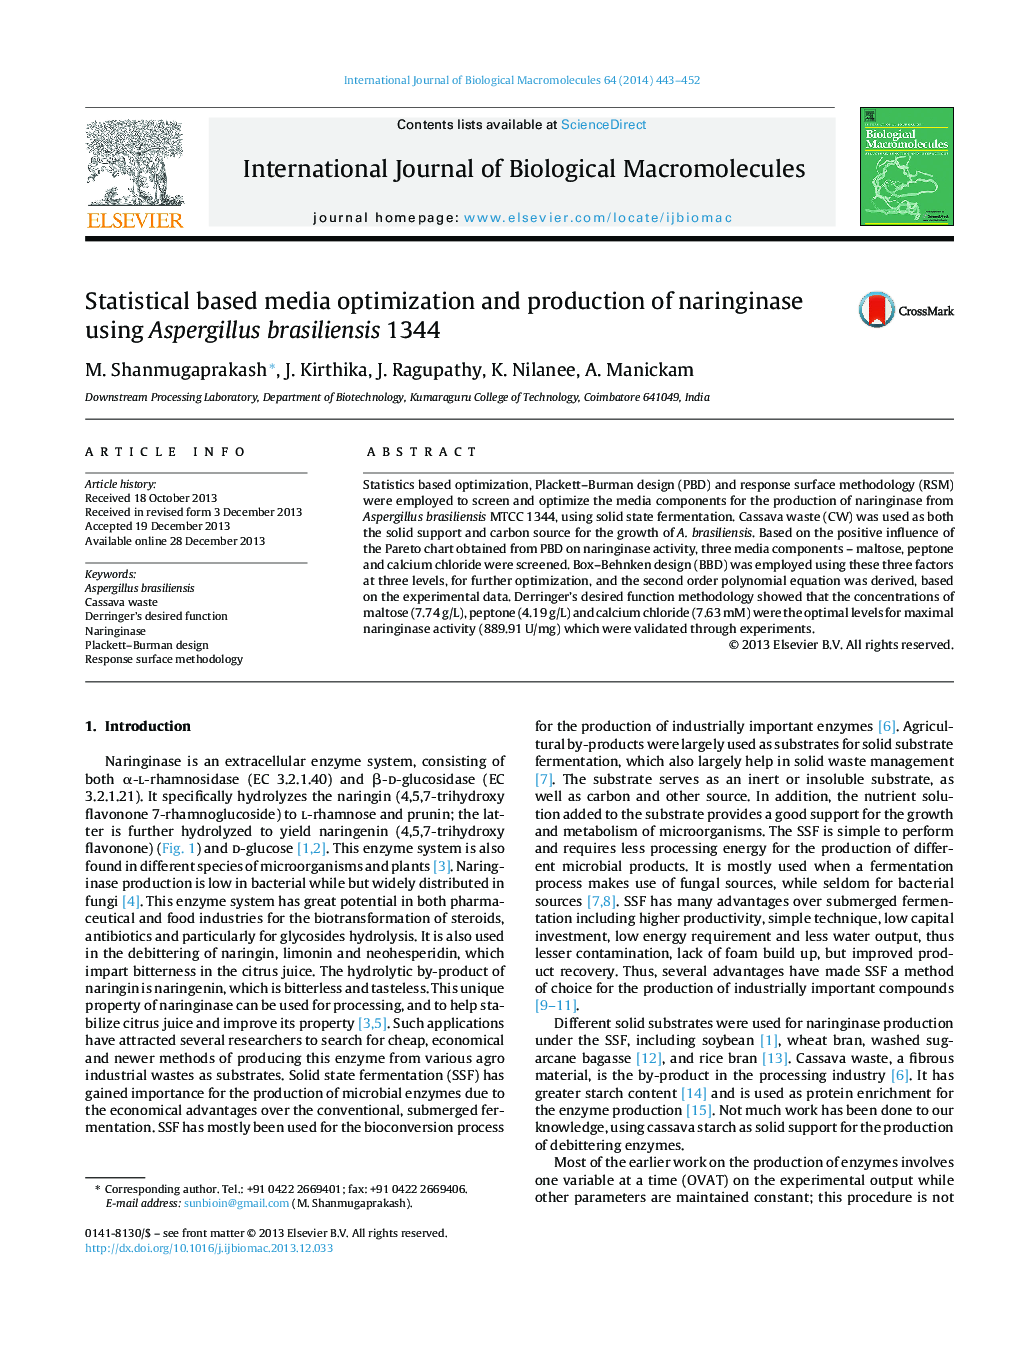 Statistical based media optimization and production of naringinase using Aspergillus brasiliensis 1344